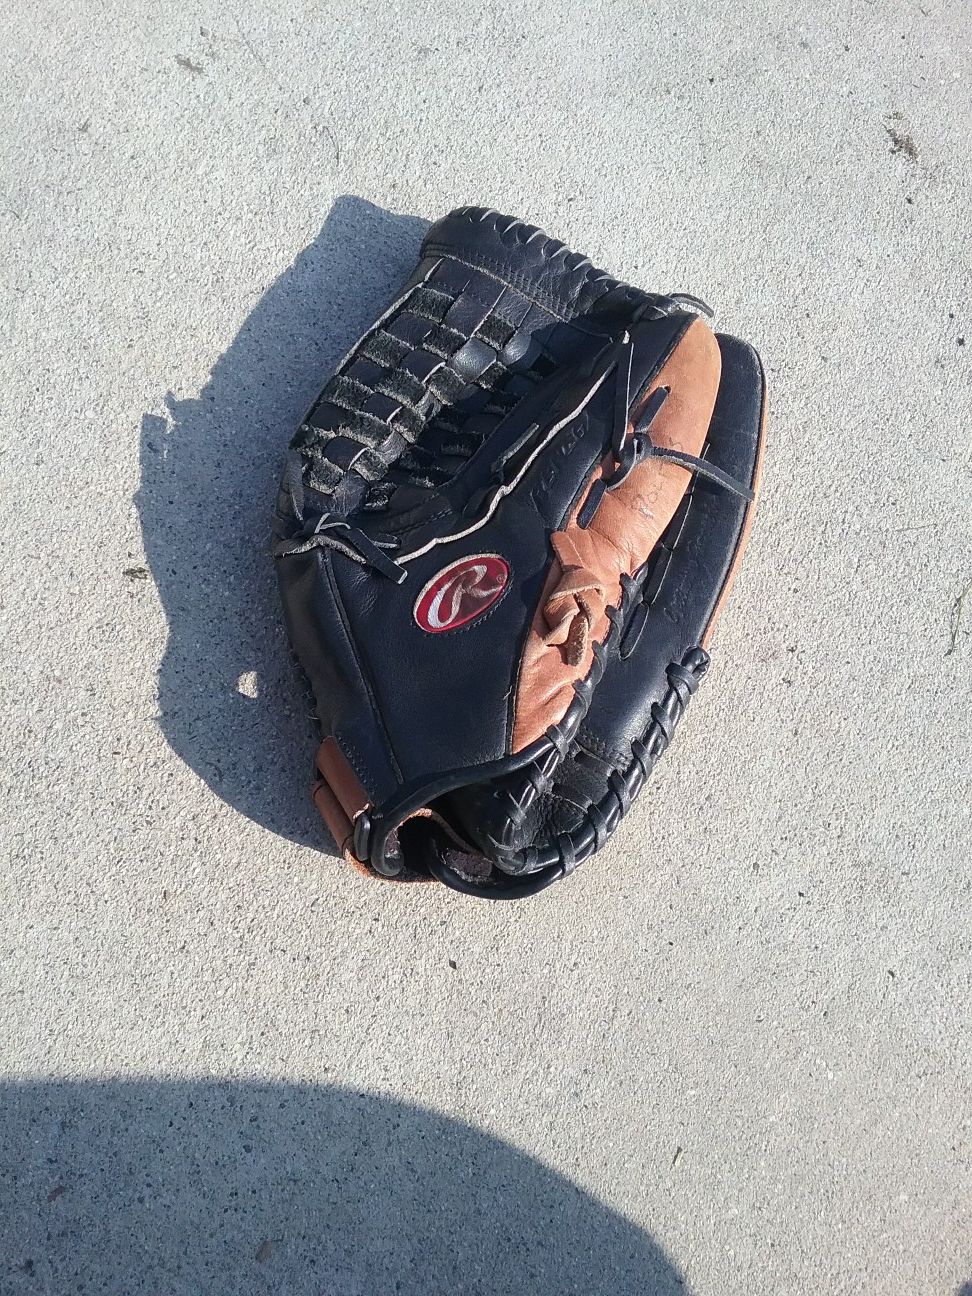 Rawlings softball glove